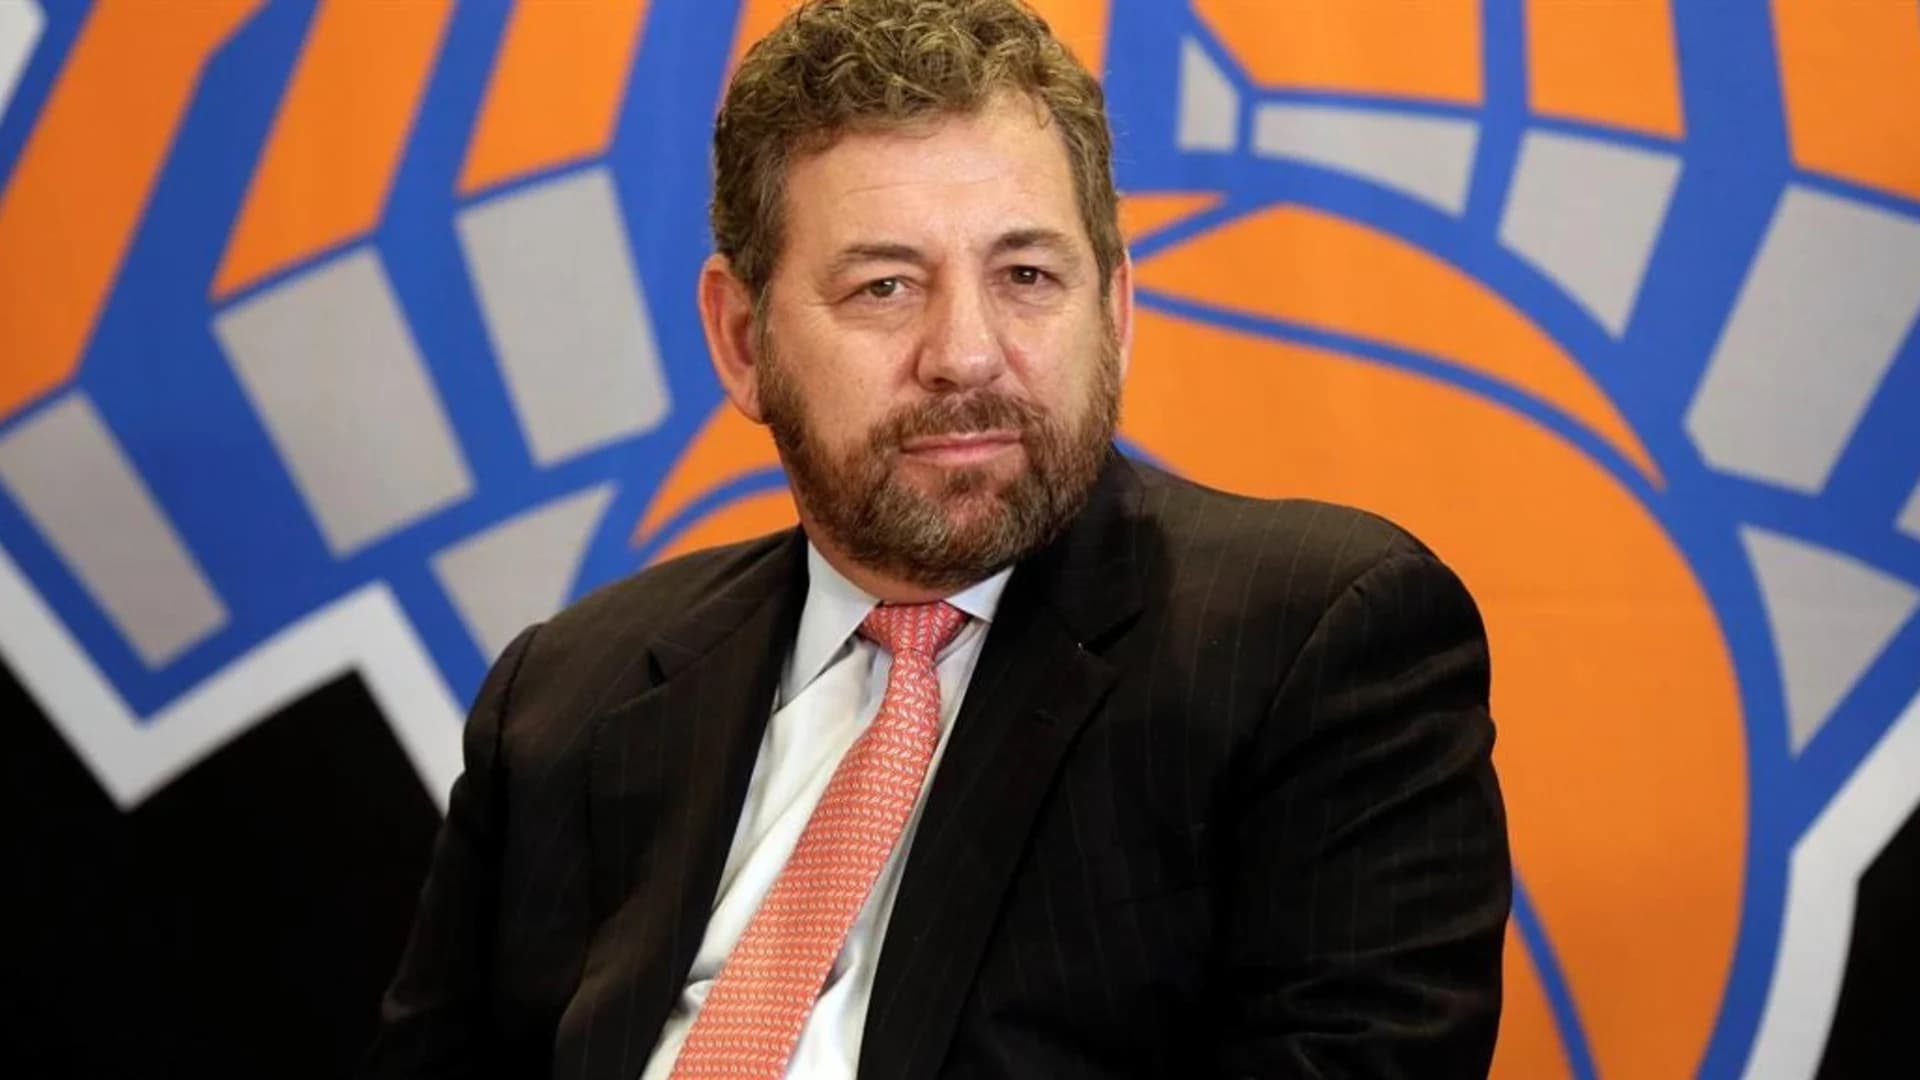 Knicks owner, MSG chairman James Dolan has coronavirus